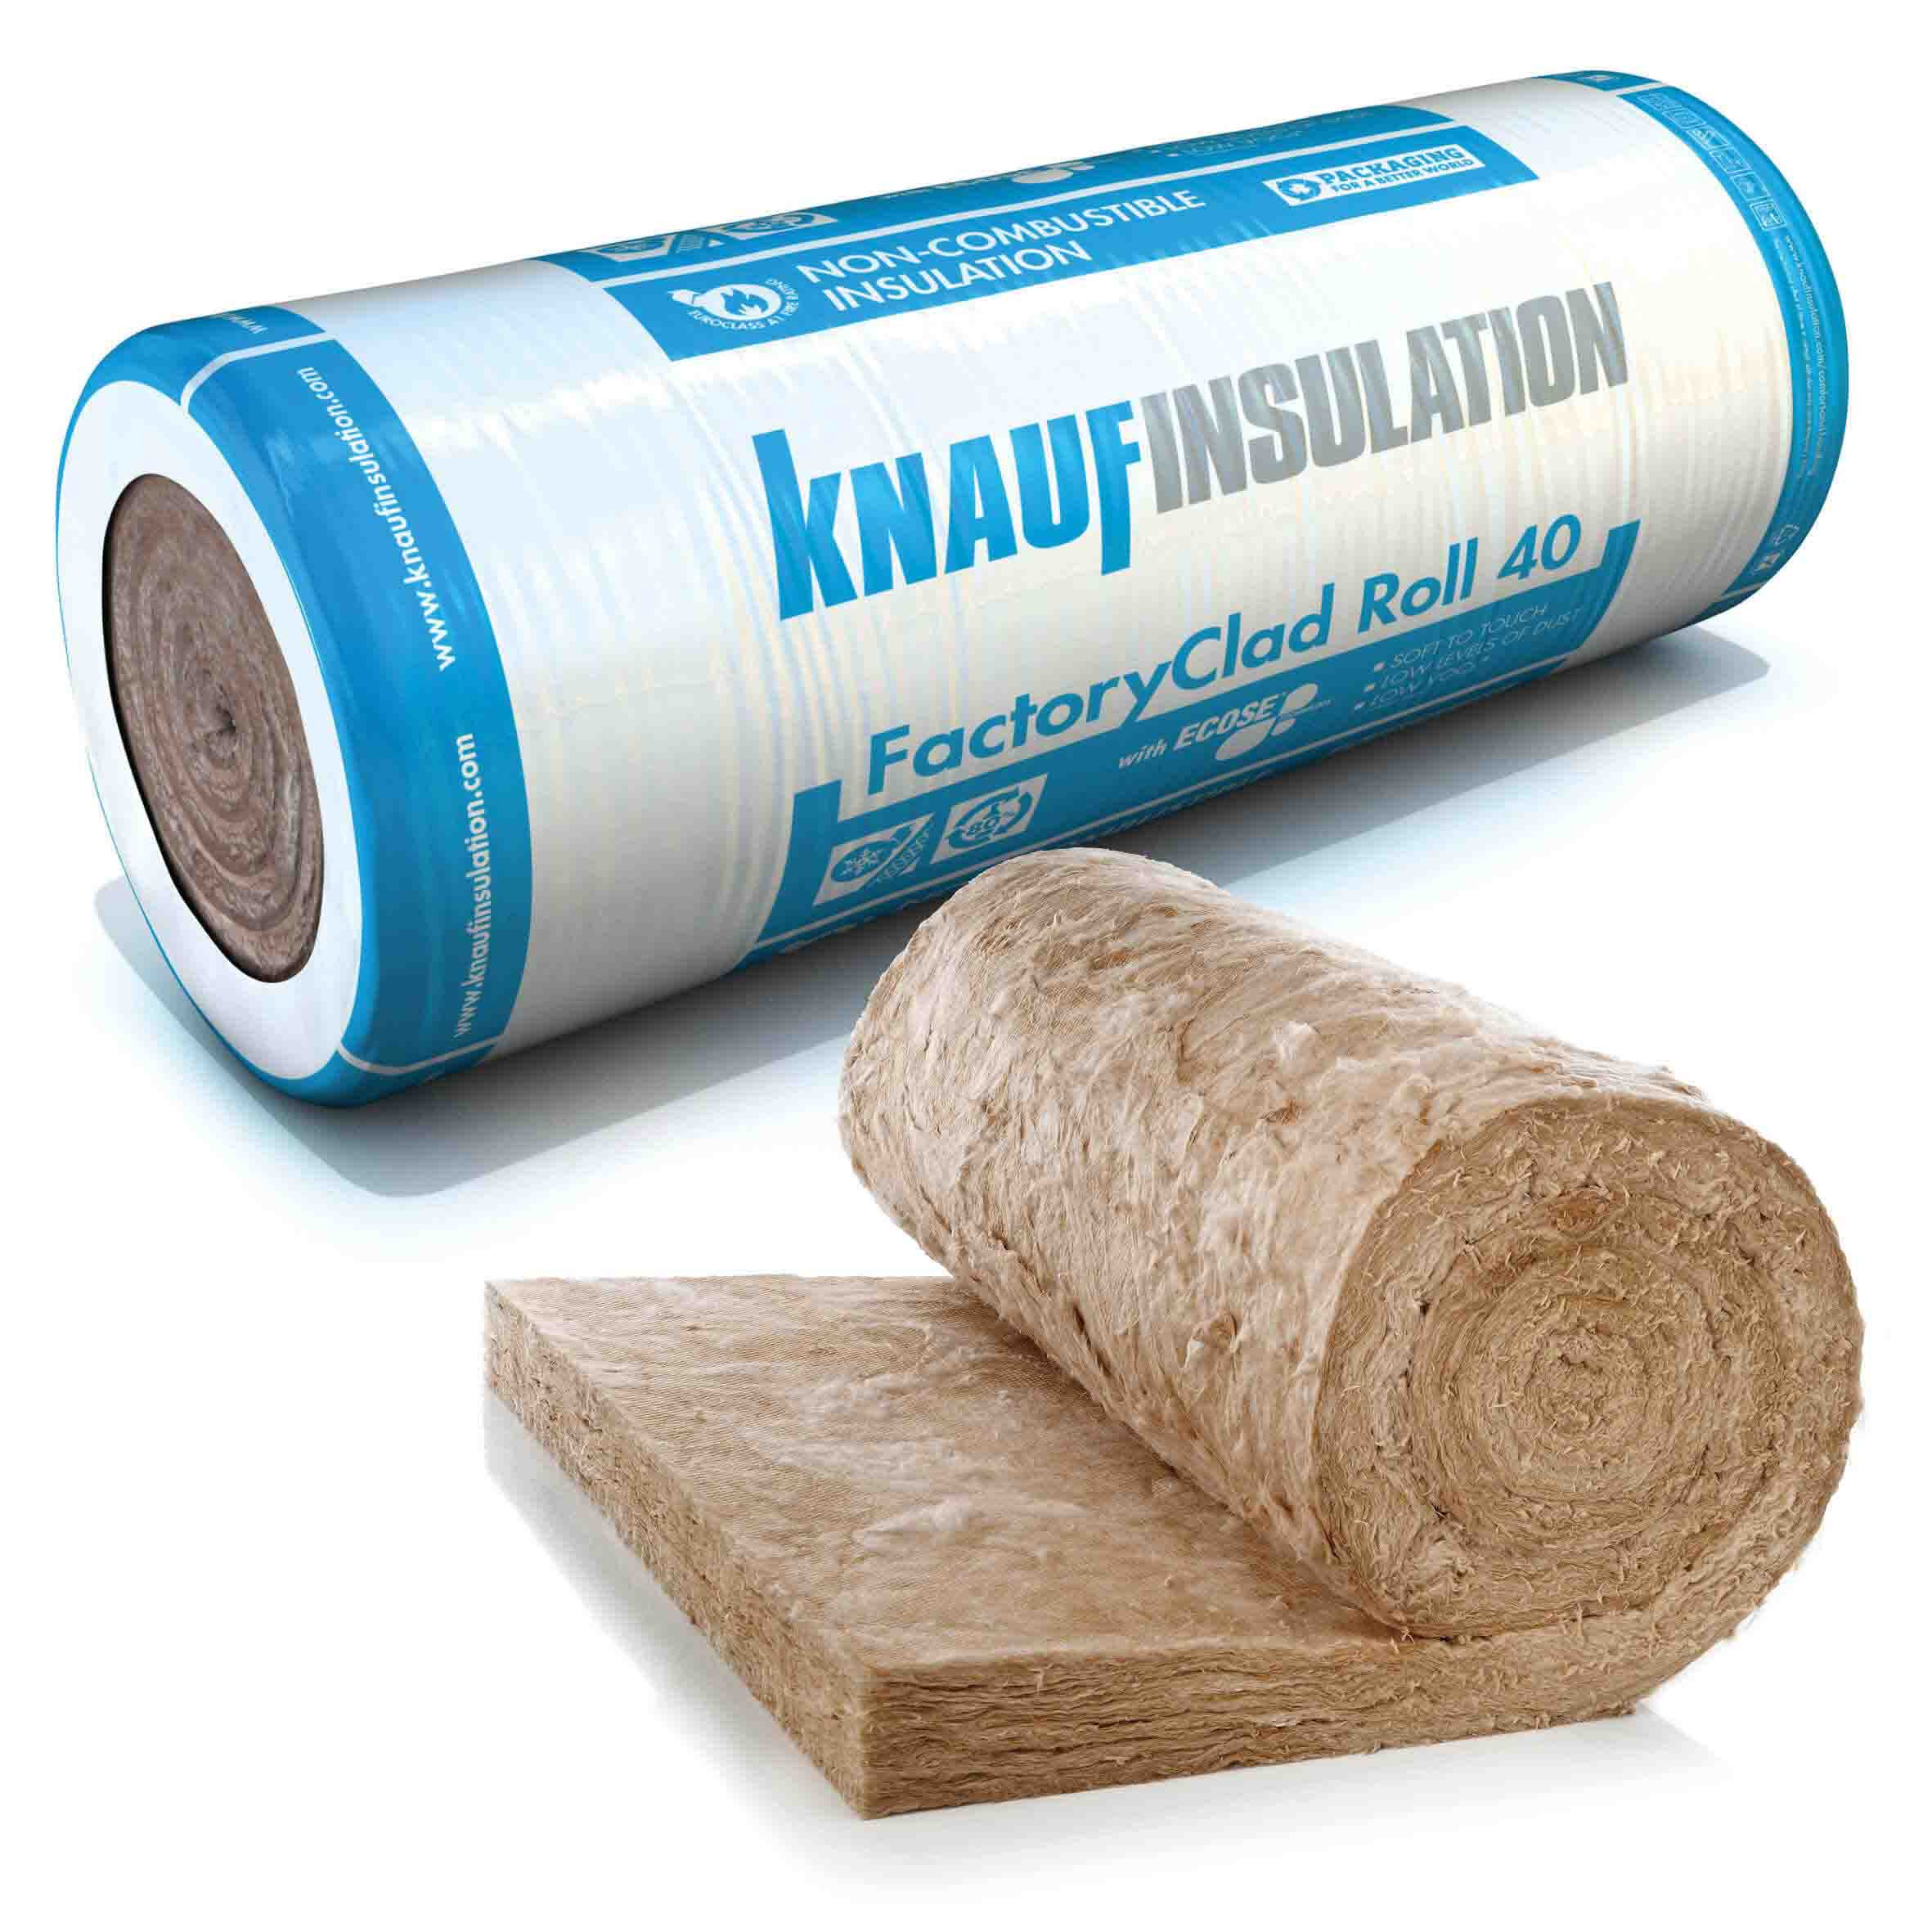 Knauf FactoryClad Roll 40 Glass Mineral Wool